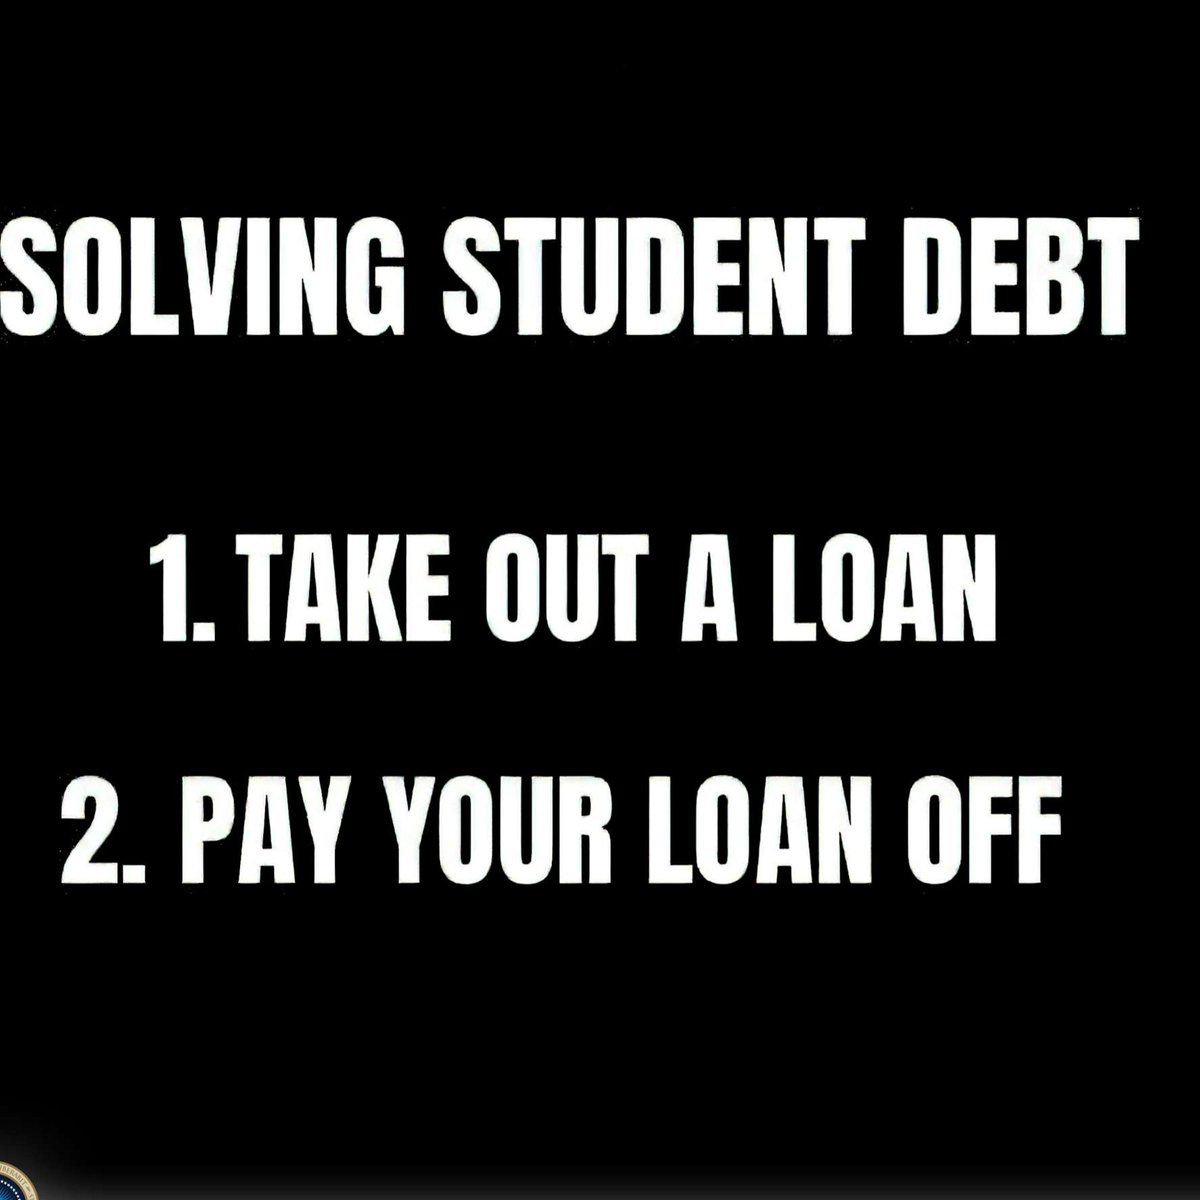 Took student loan, payoff your debt! @x4Eileen @cmir_r @goldisez @3030bubba @pixiebell19 @KevinGills13 @LadyK_Maga @texan0371 @fairladi5 @1NJConservative @WTFoxtrot10 @emma6USA @fugustra1 @PecanC8 @pilldrswife @jexykabarker @Mikedknight @texasrecks @WinterAsh12 @suppes_lisa